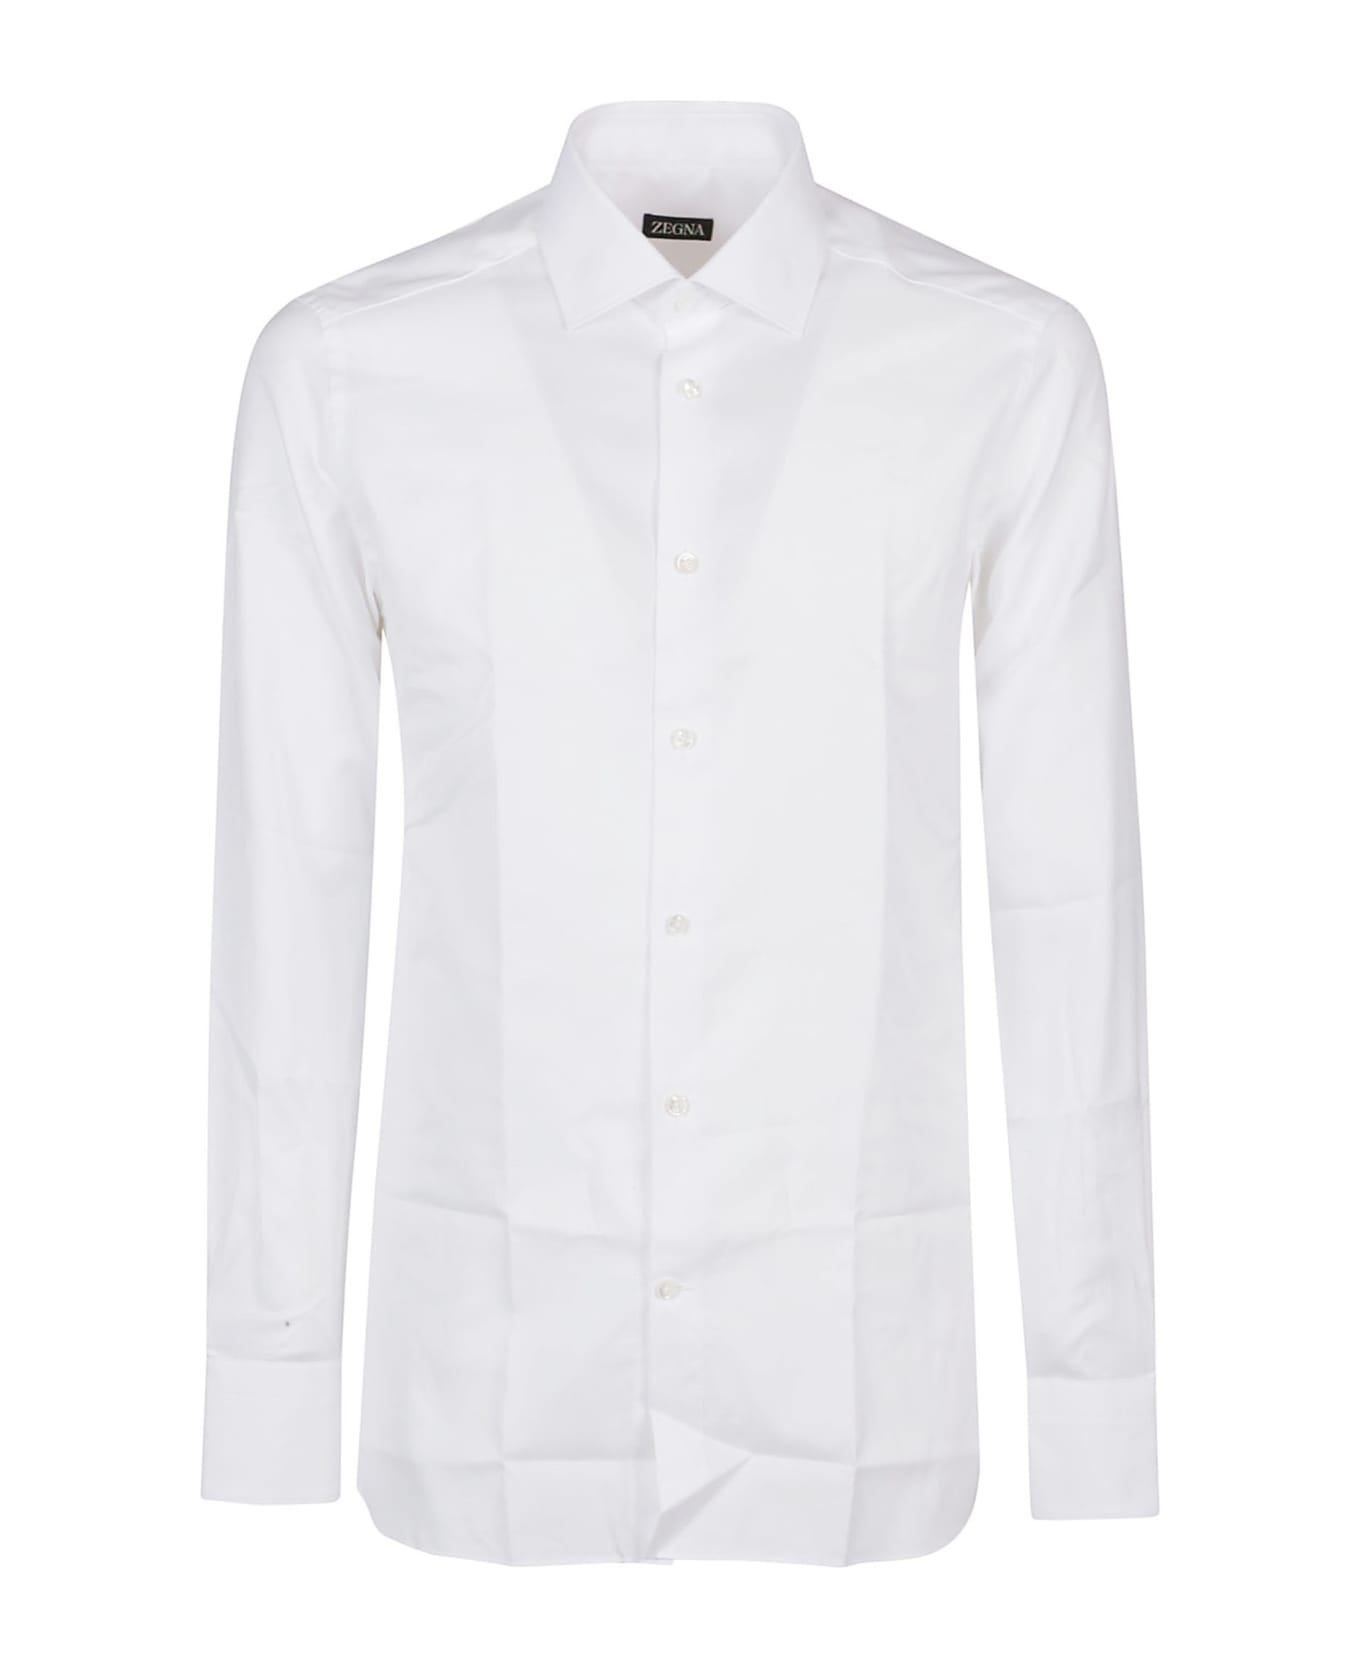 Zegna Long Sleeve Shirt - Bianco シャツ